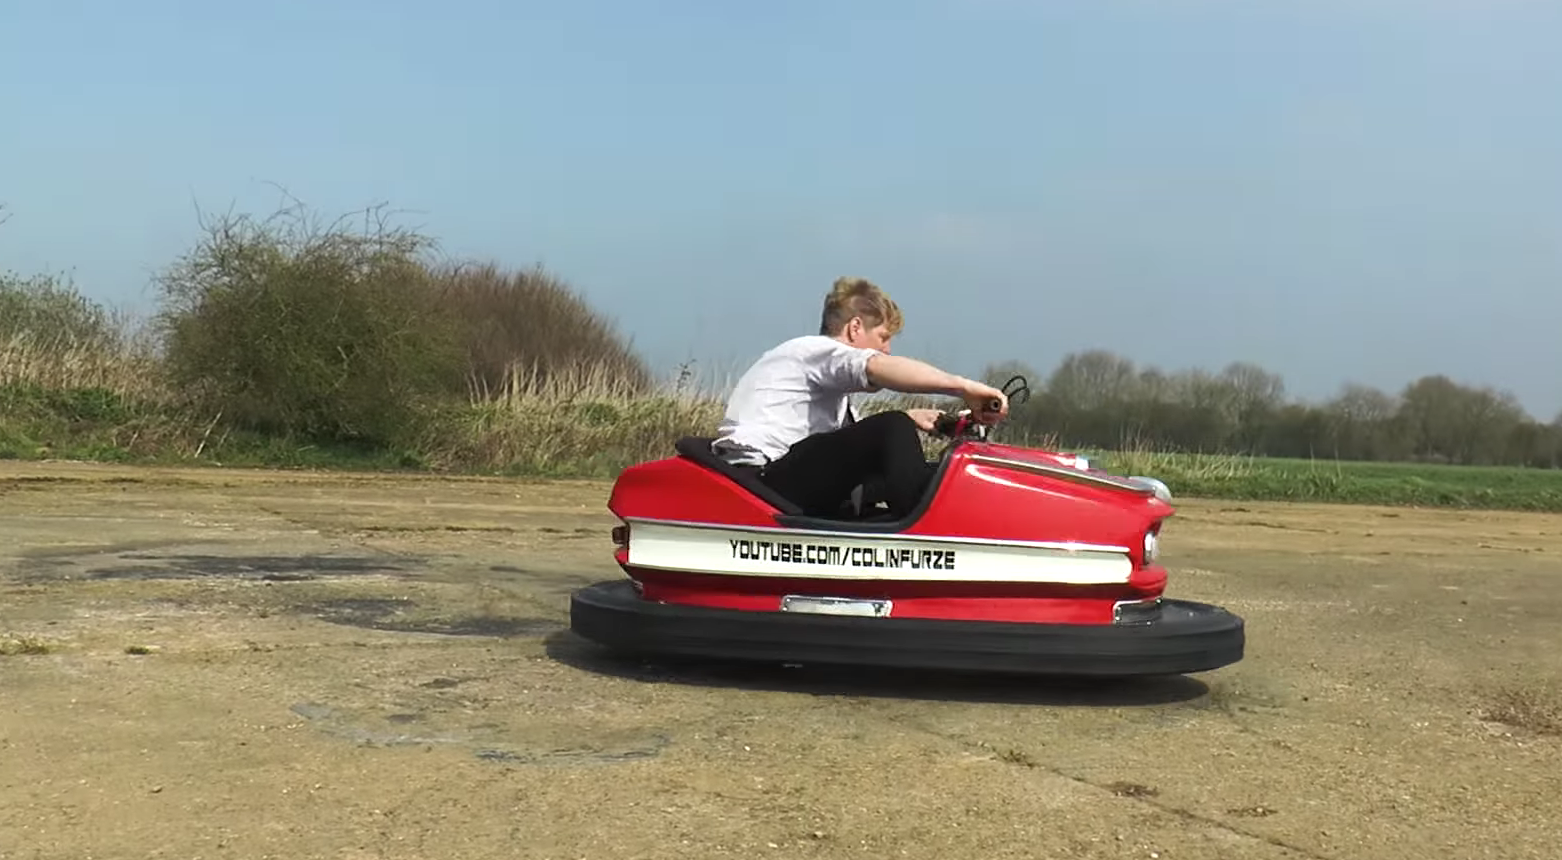 Фото: @ Youtube "World's Fastest Bumper Car - 600cc 100bhp But how FAST? - Colin Furze Top Gear Project"/Скриншот L!FE